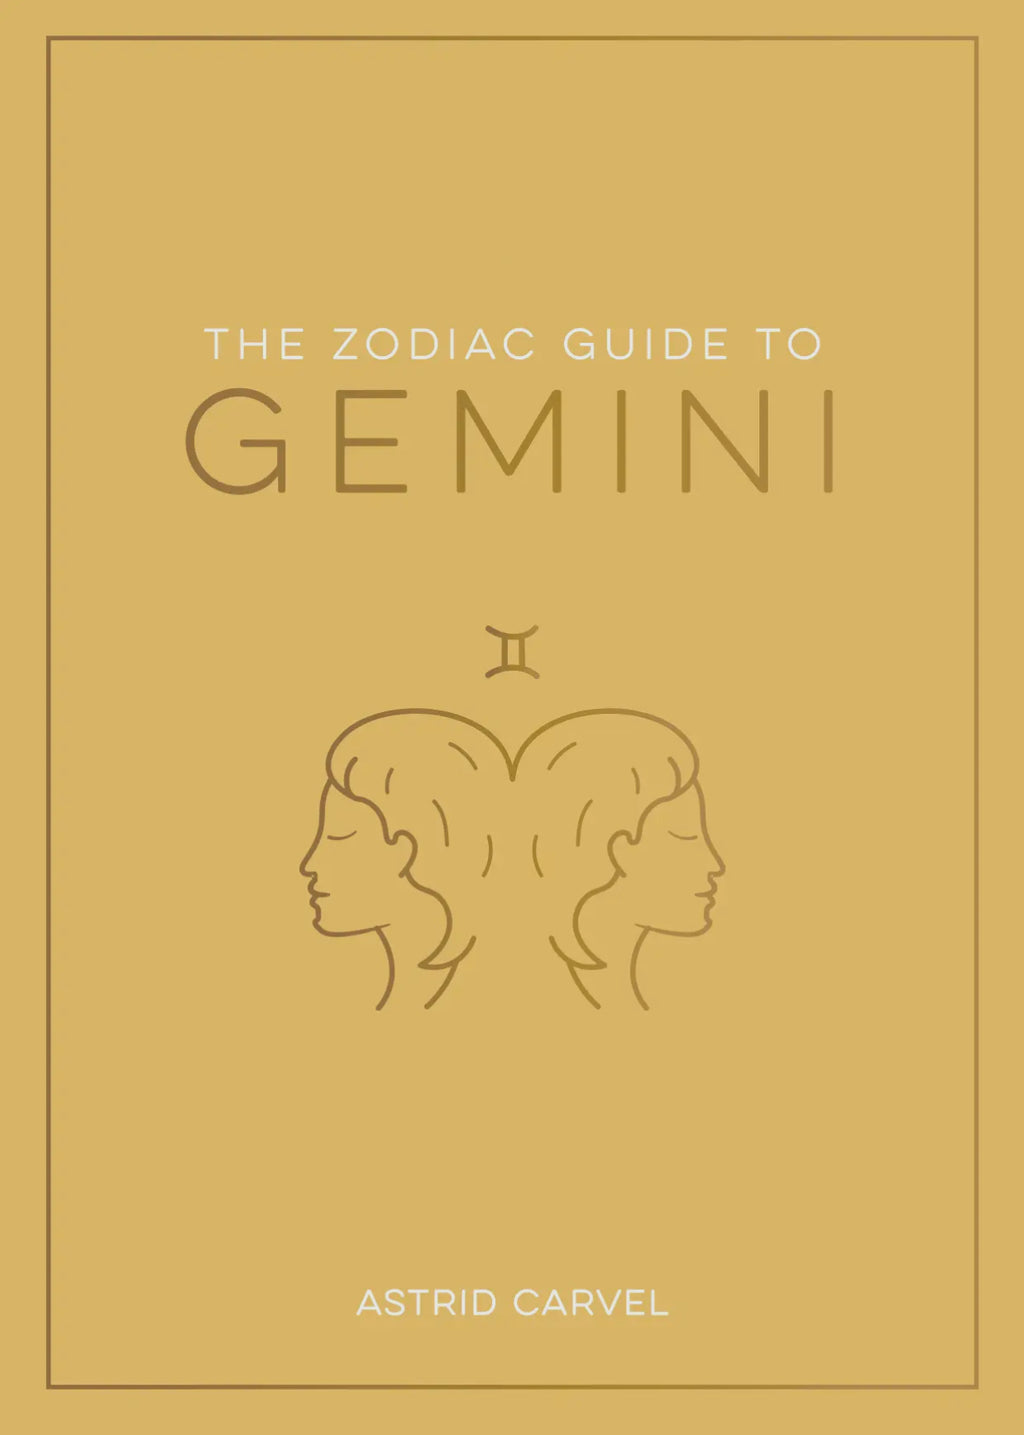 The Zodiac Guide to: Gemini